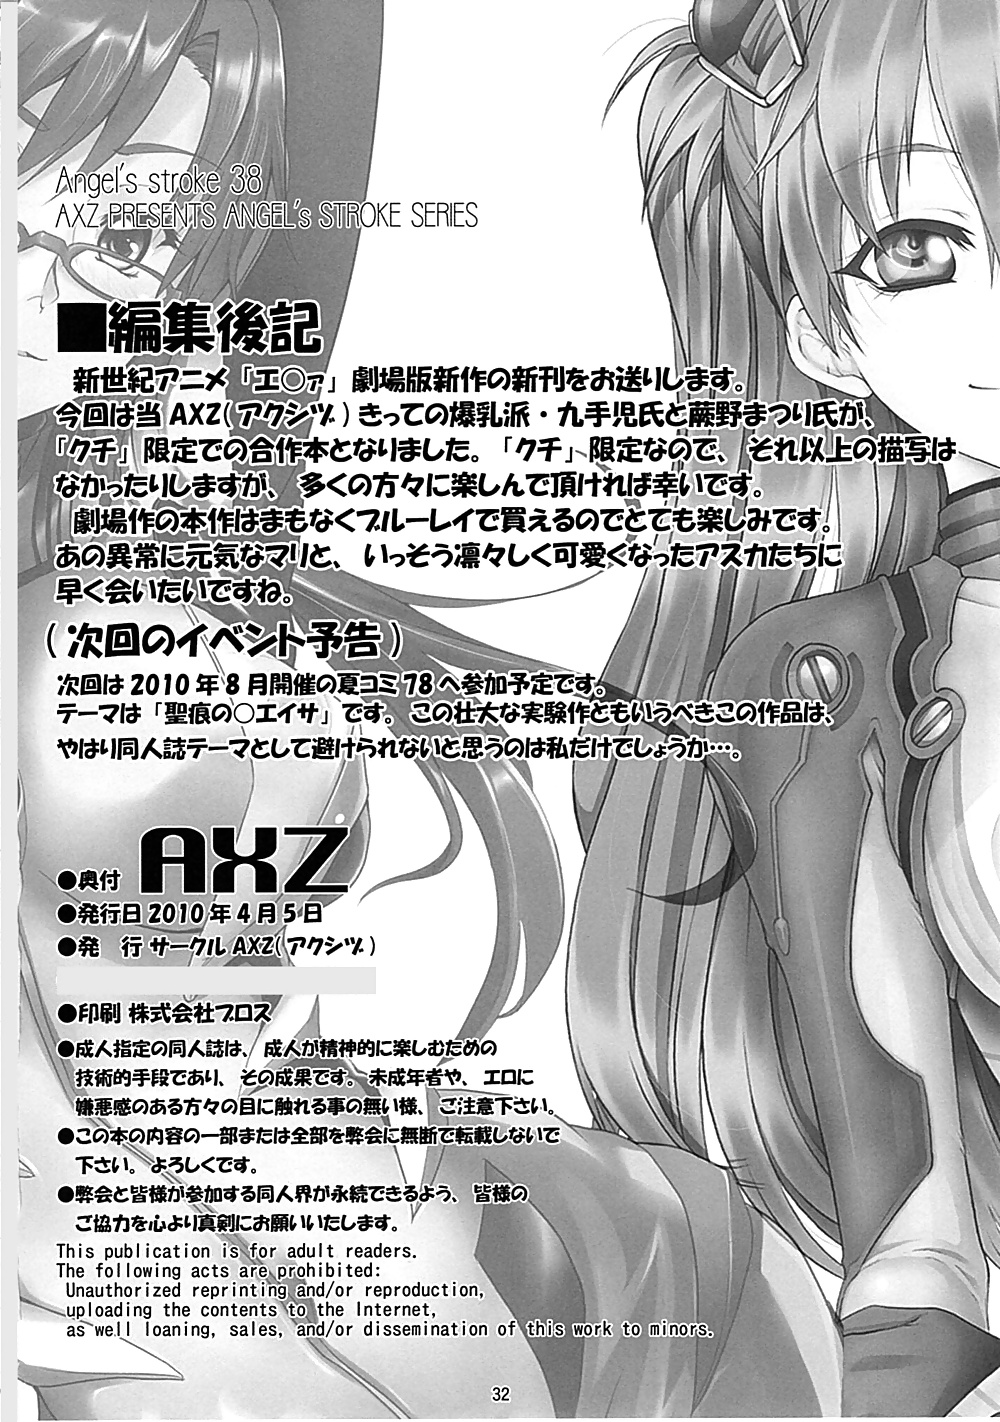 AXZ Angel's Stroke 38 Okuchishibori Neon Genesis Evangelion  #29677208